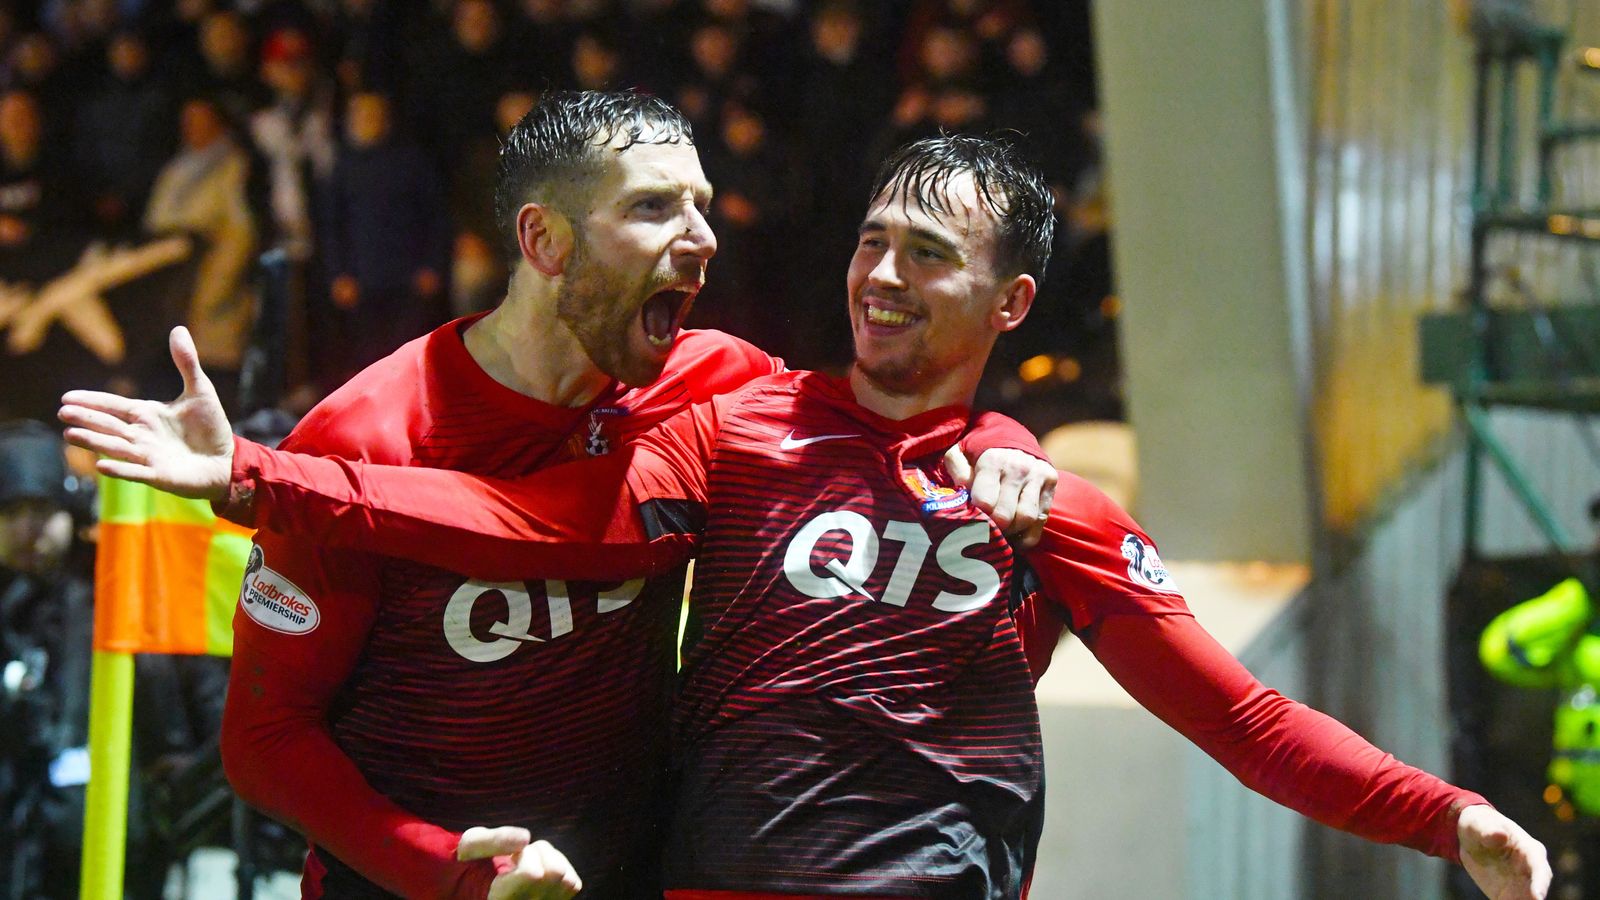 St Mirren 0 - 1 Kilmarnock - Match Report & Highlights